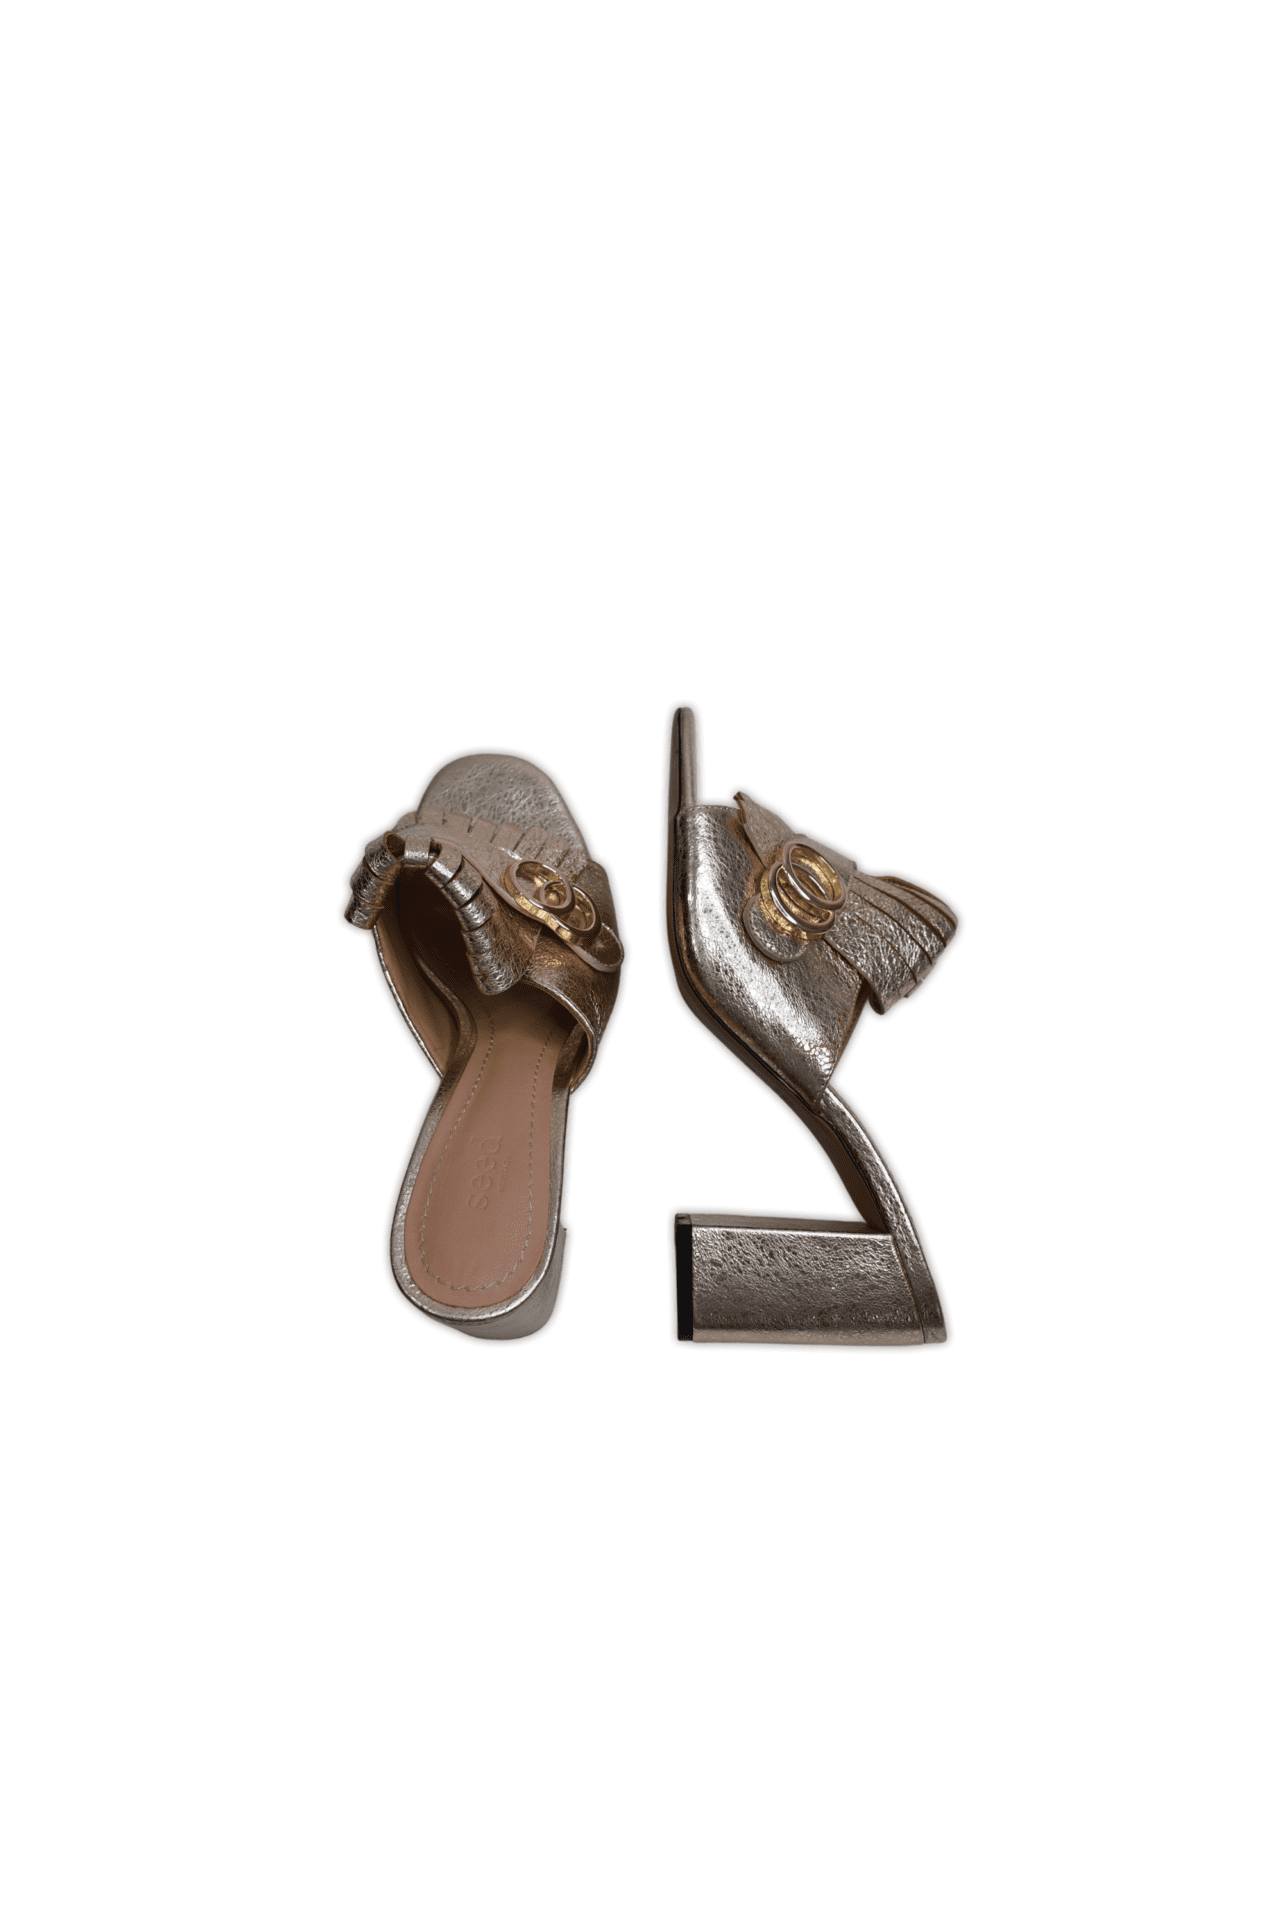 Gold slip on heels 8cm block heel, Gucci inspired